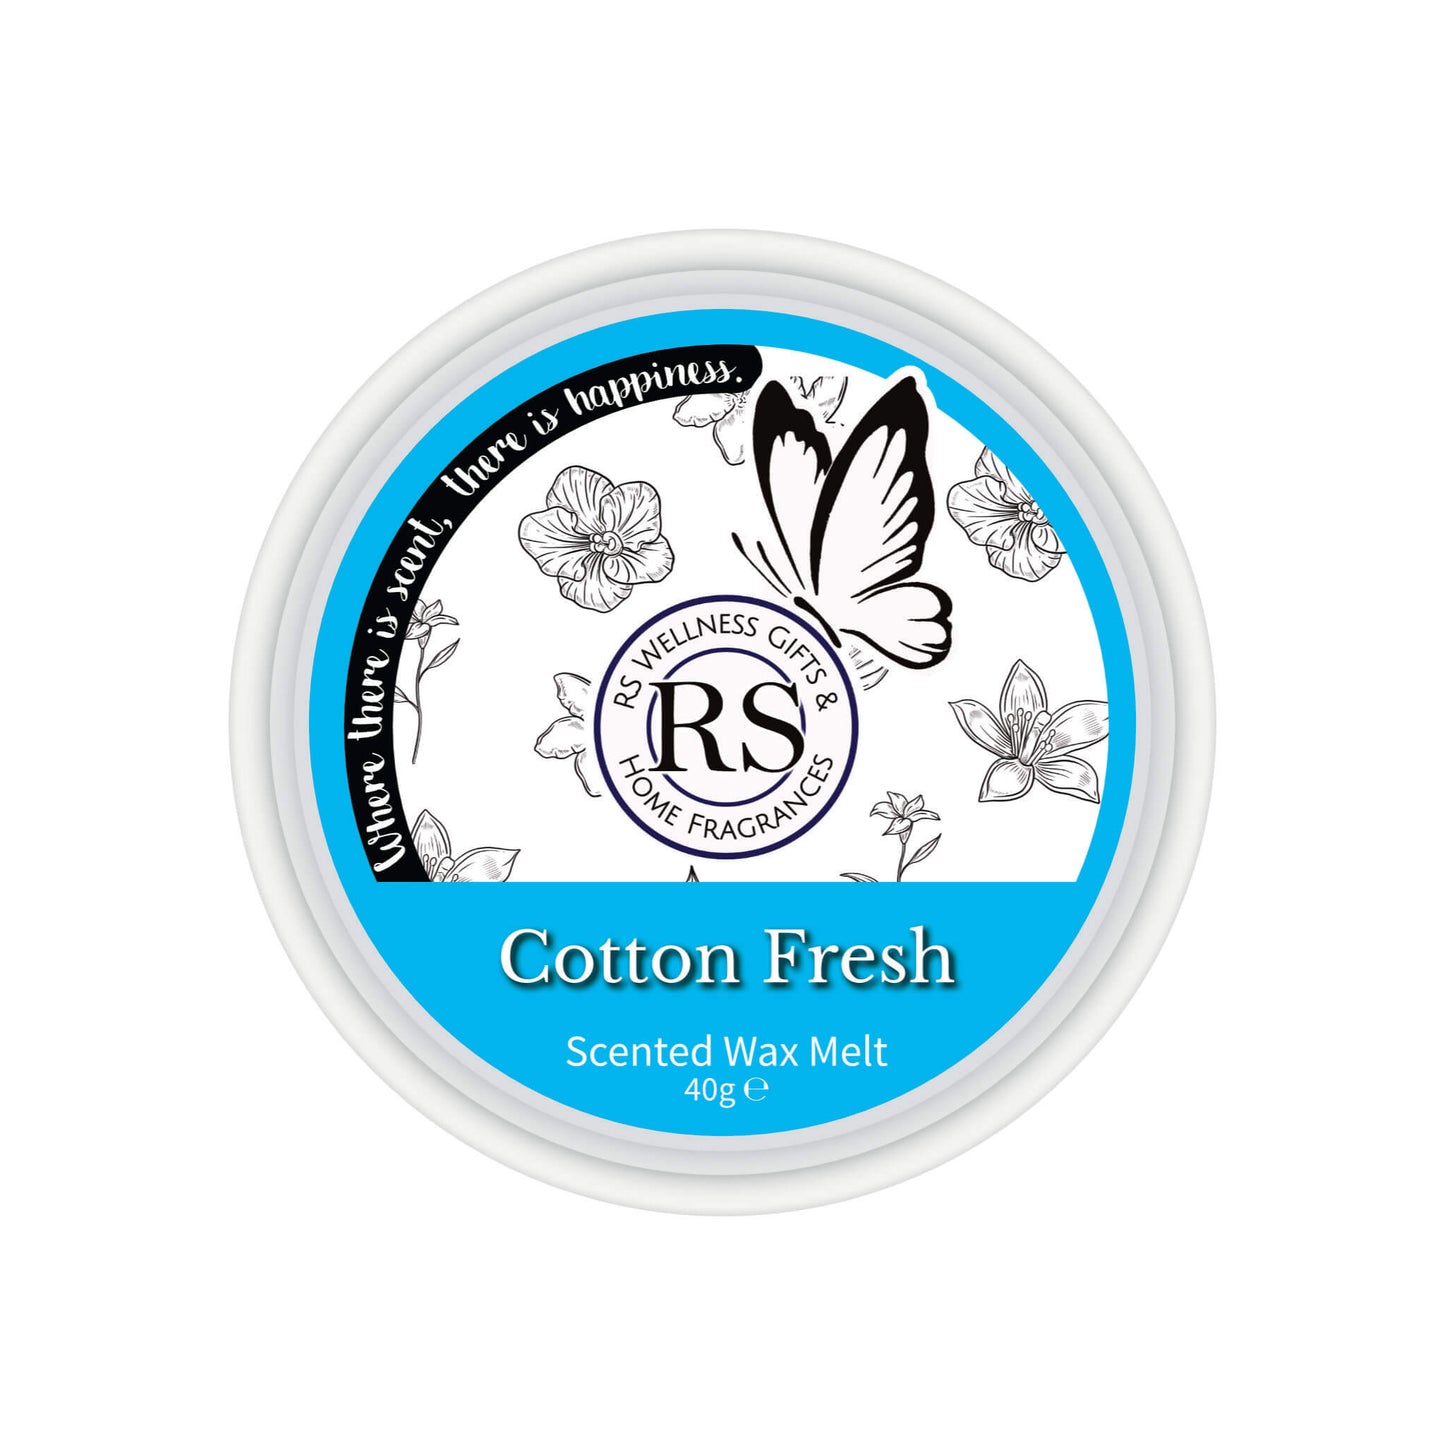 Cotton Fresh Wax Melt